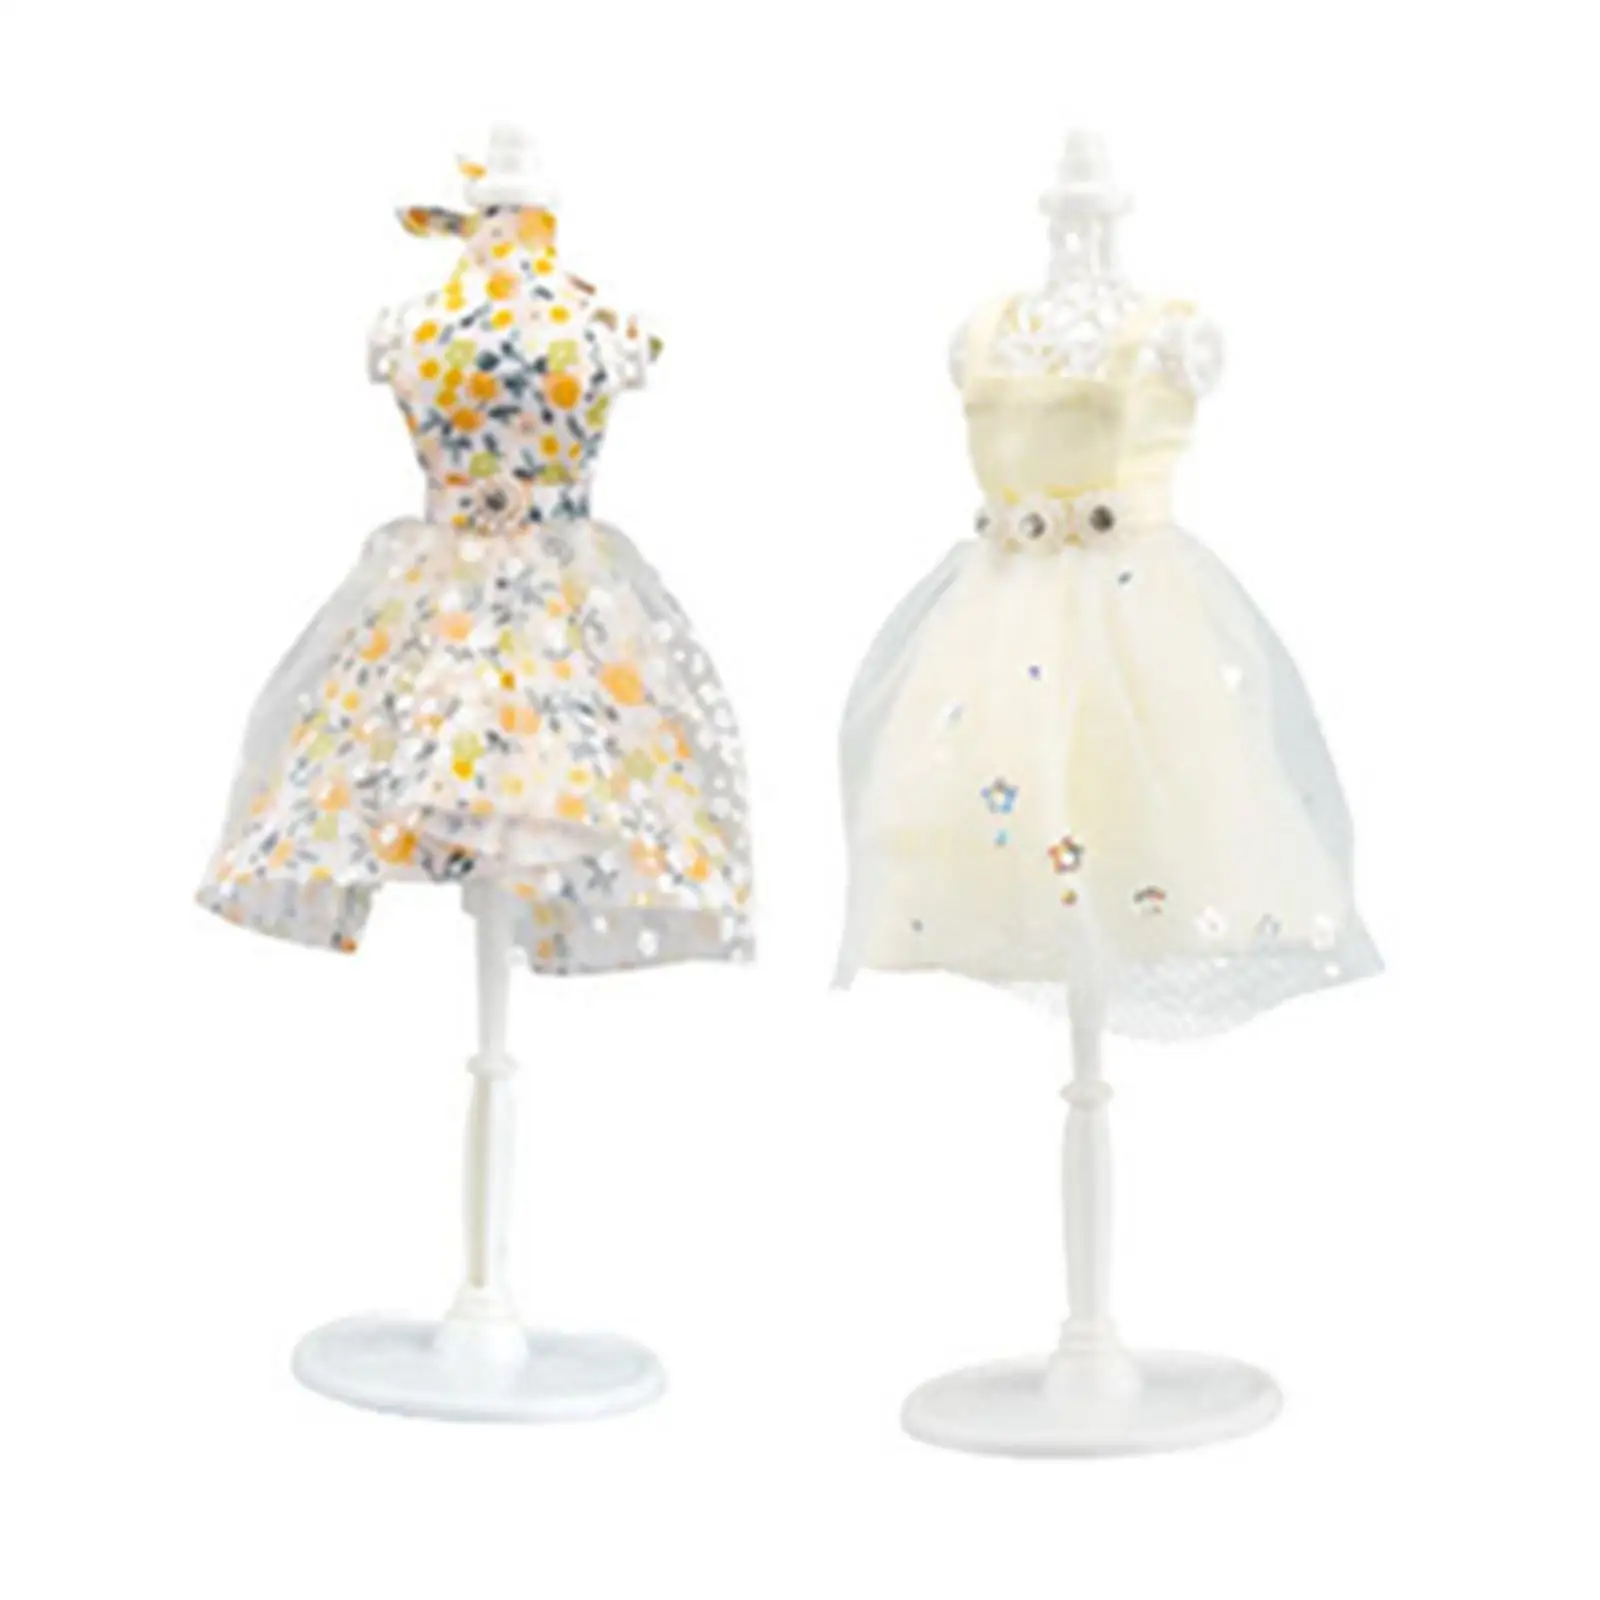 Doll Clothing design Princess Dress Clothes Set dress up Exquisite Fashion Design Kit for Birthday Gift Girls Beginner